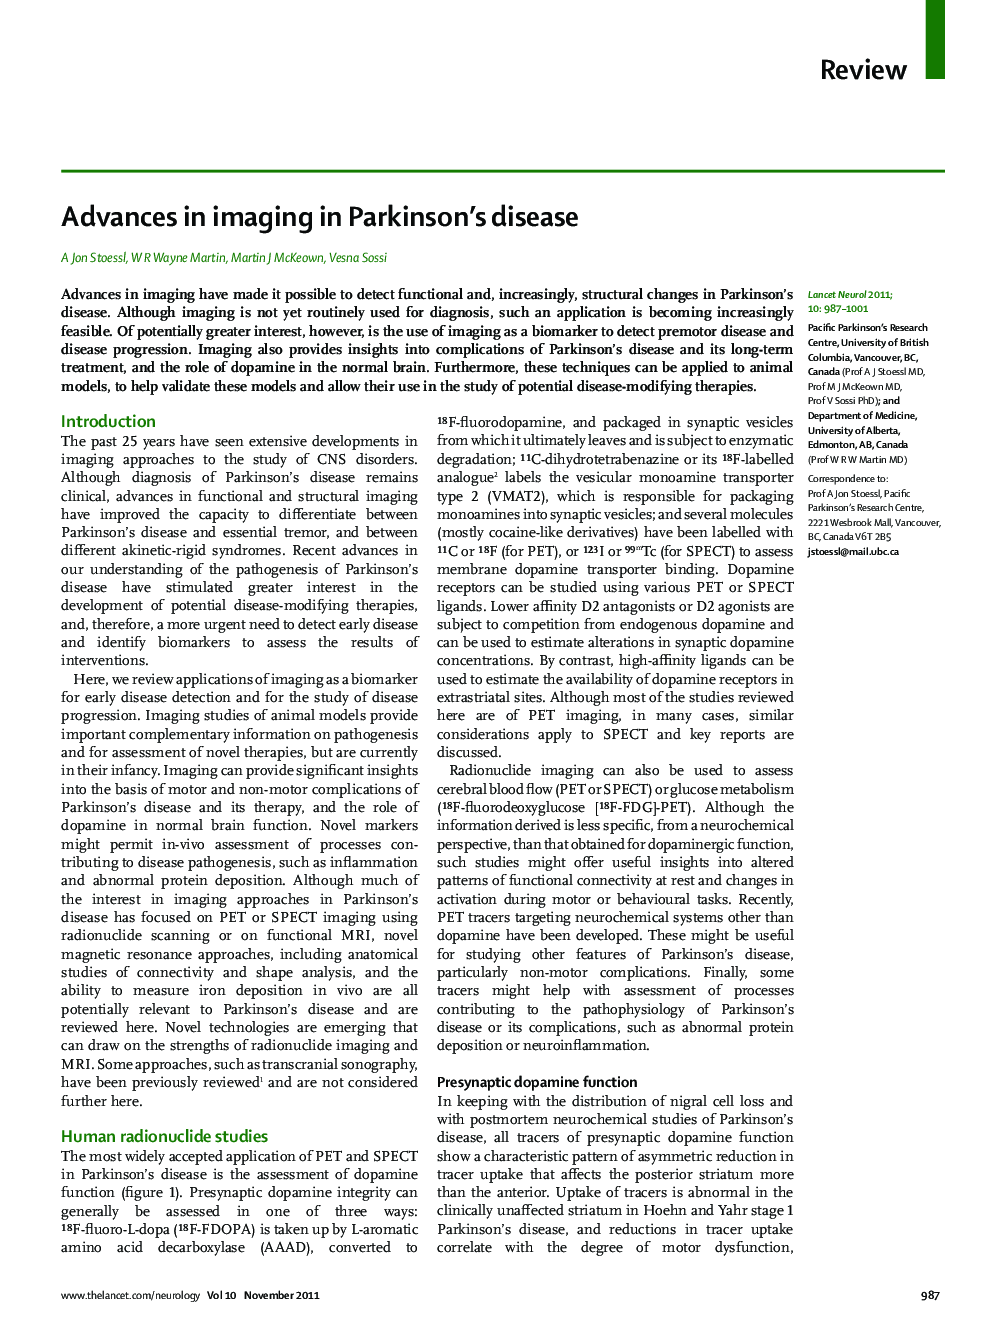 Advances in imaging in Parkinson's disease